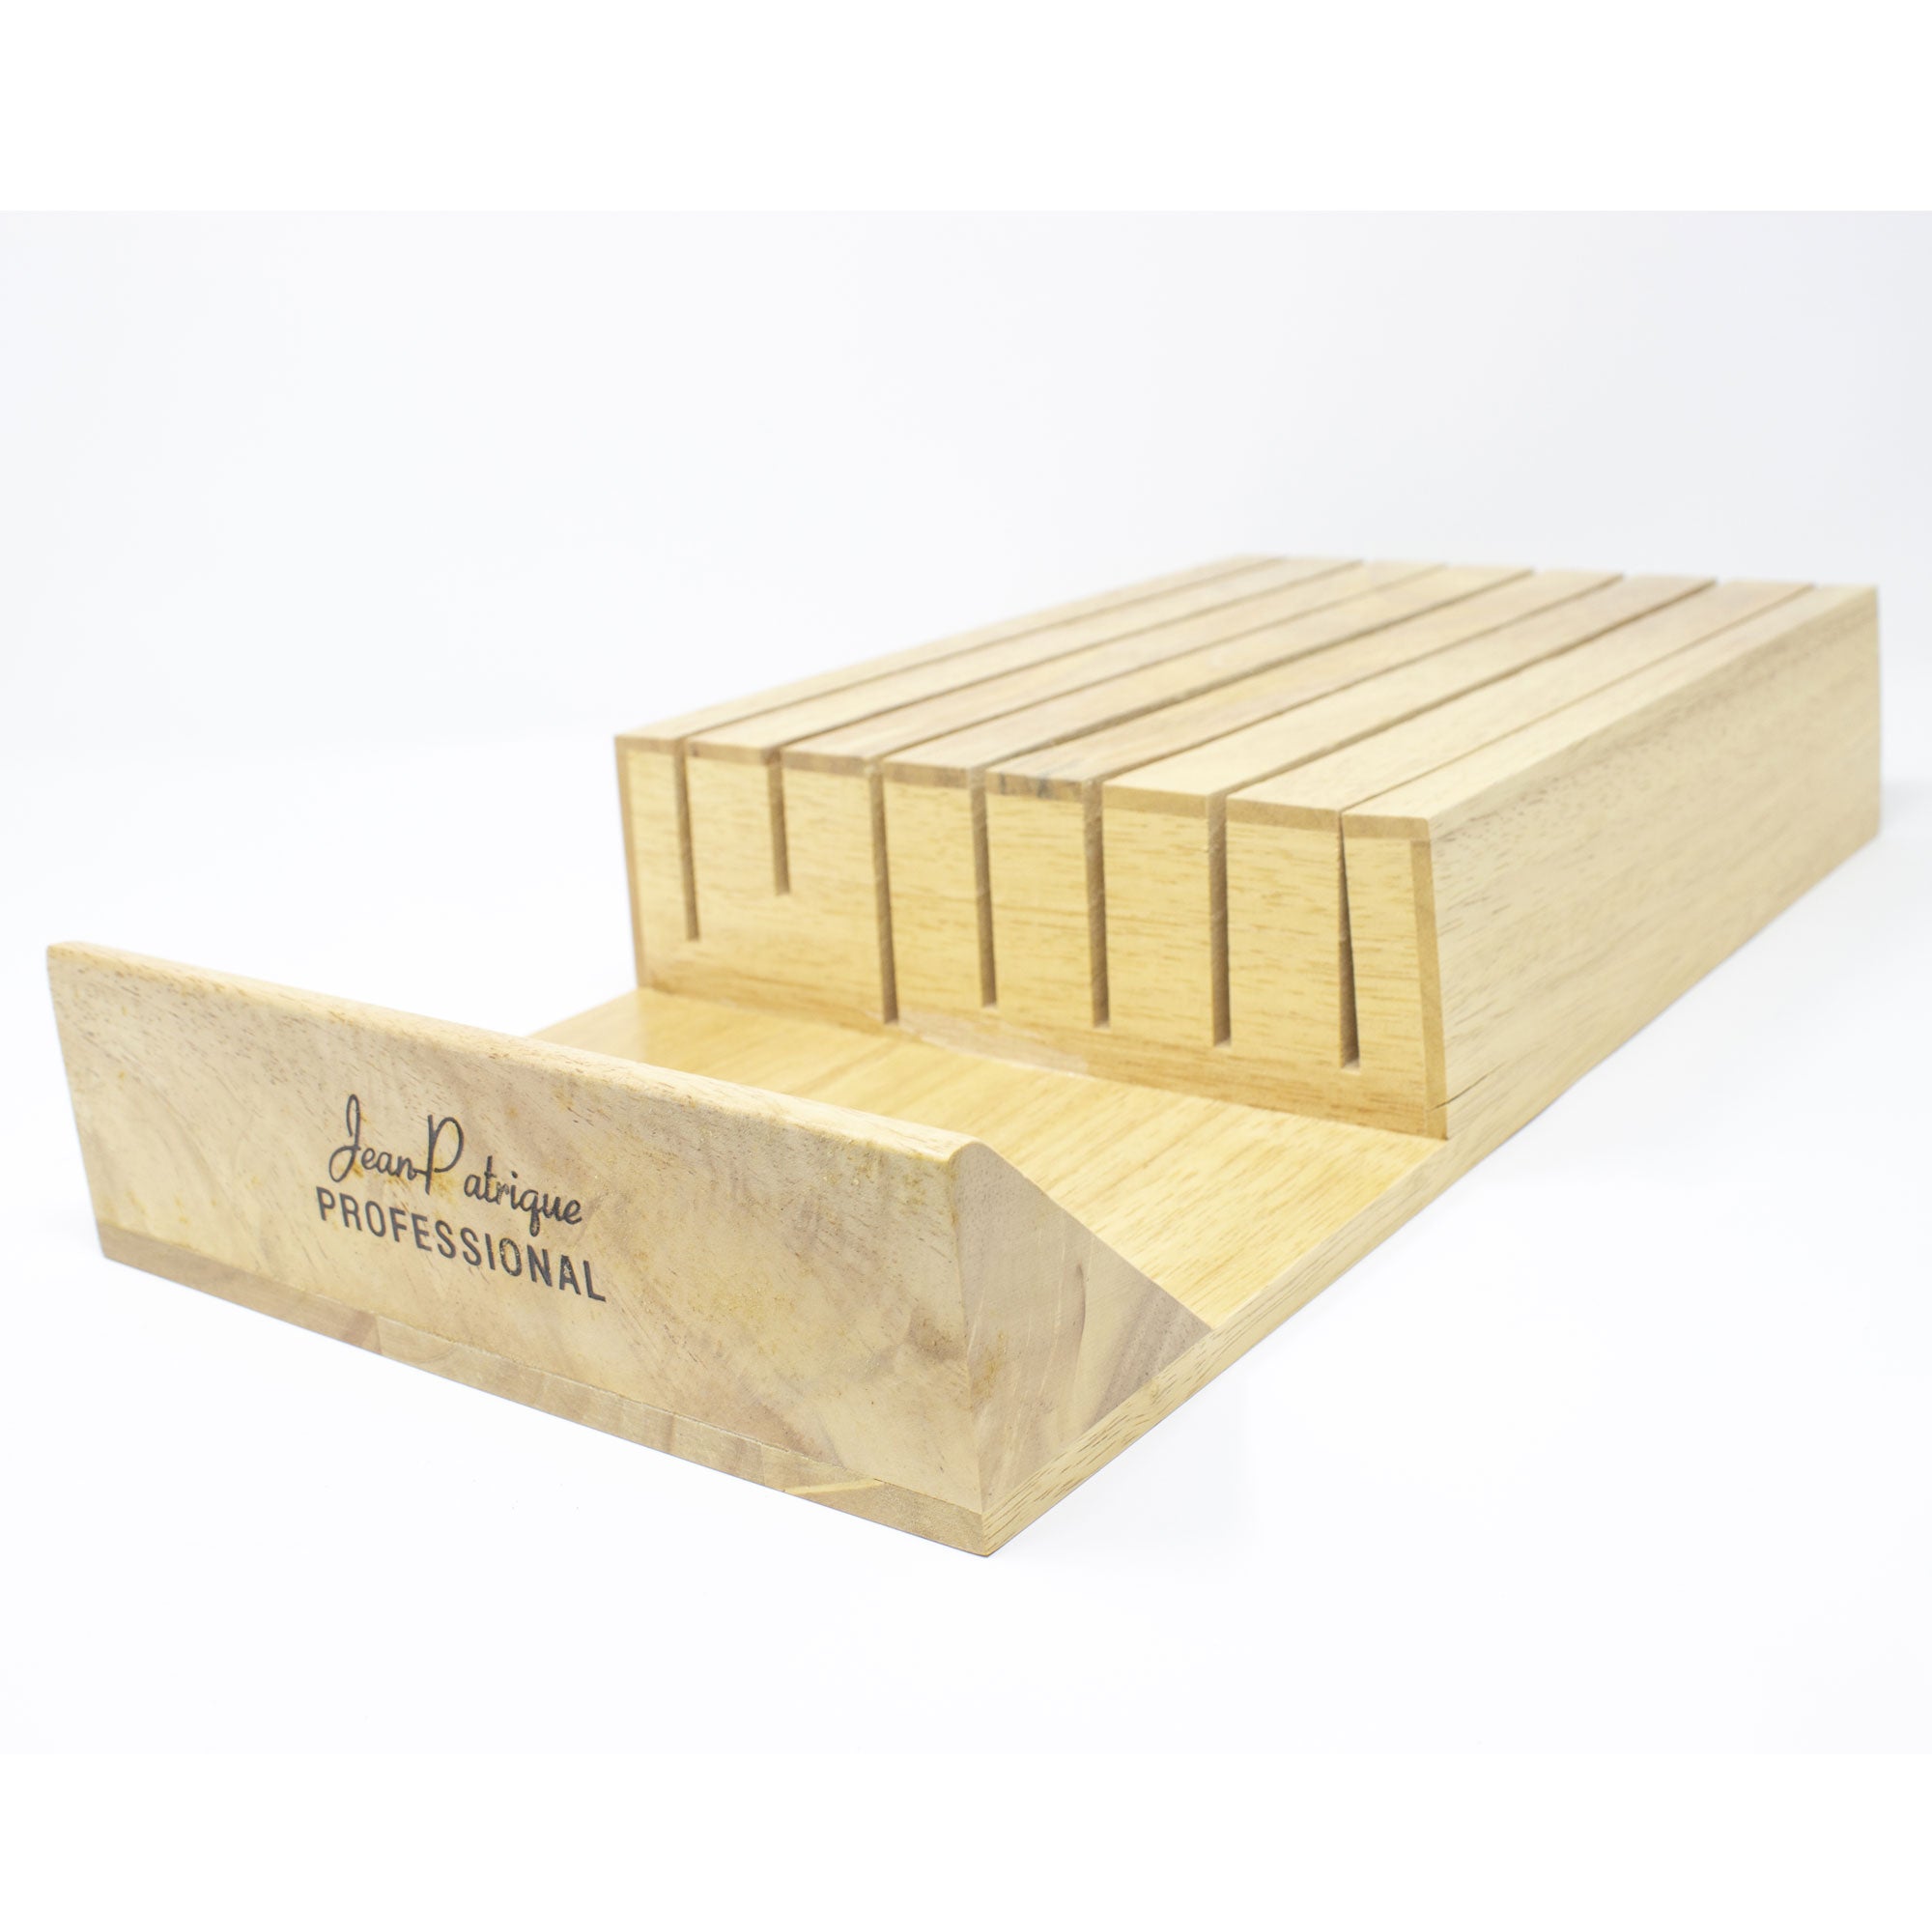 Jean-Patrique In-drawer Knife Block 7-Slot Wood Knife Storage Organiser